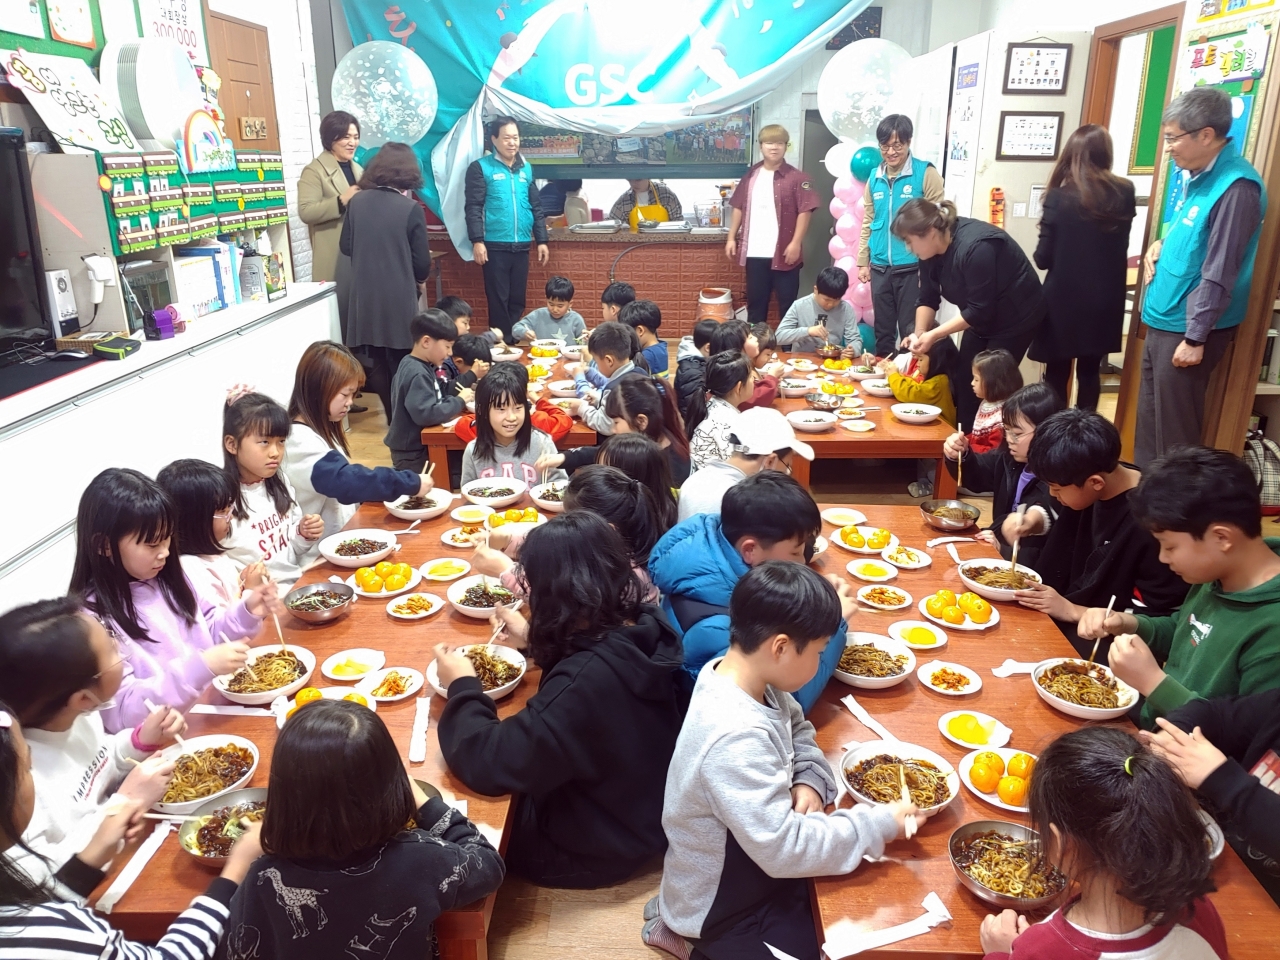 GS칼텍스가 30일 여수 돌산지역아동센터에서 개최한 ‘GS칼텍스 힐링데이’ 행사에 참가한 아동들이 자장면을 먹고 있는 모습.